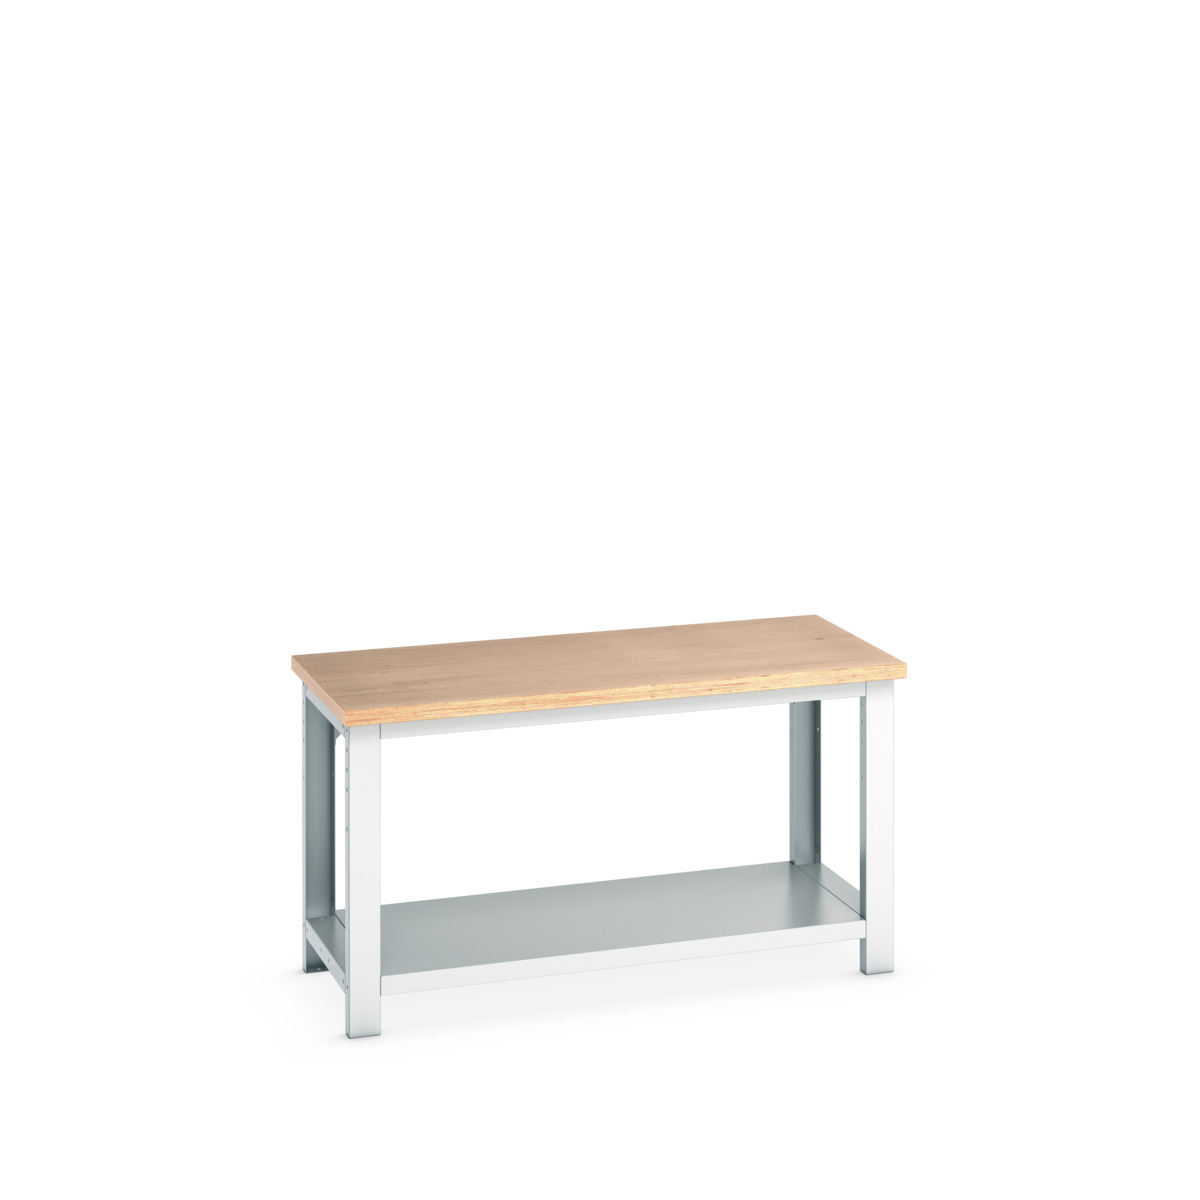 41003503. - cubio framework bench (mpx)